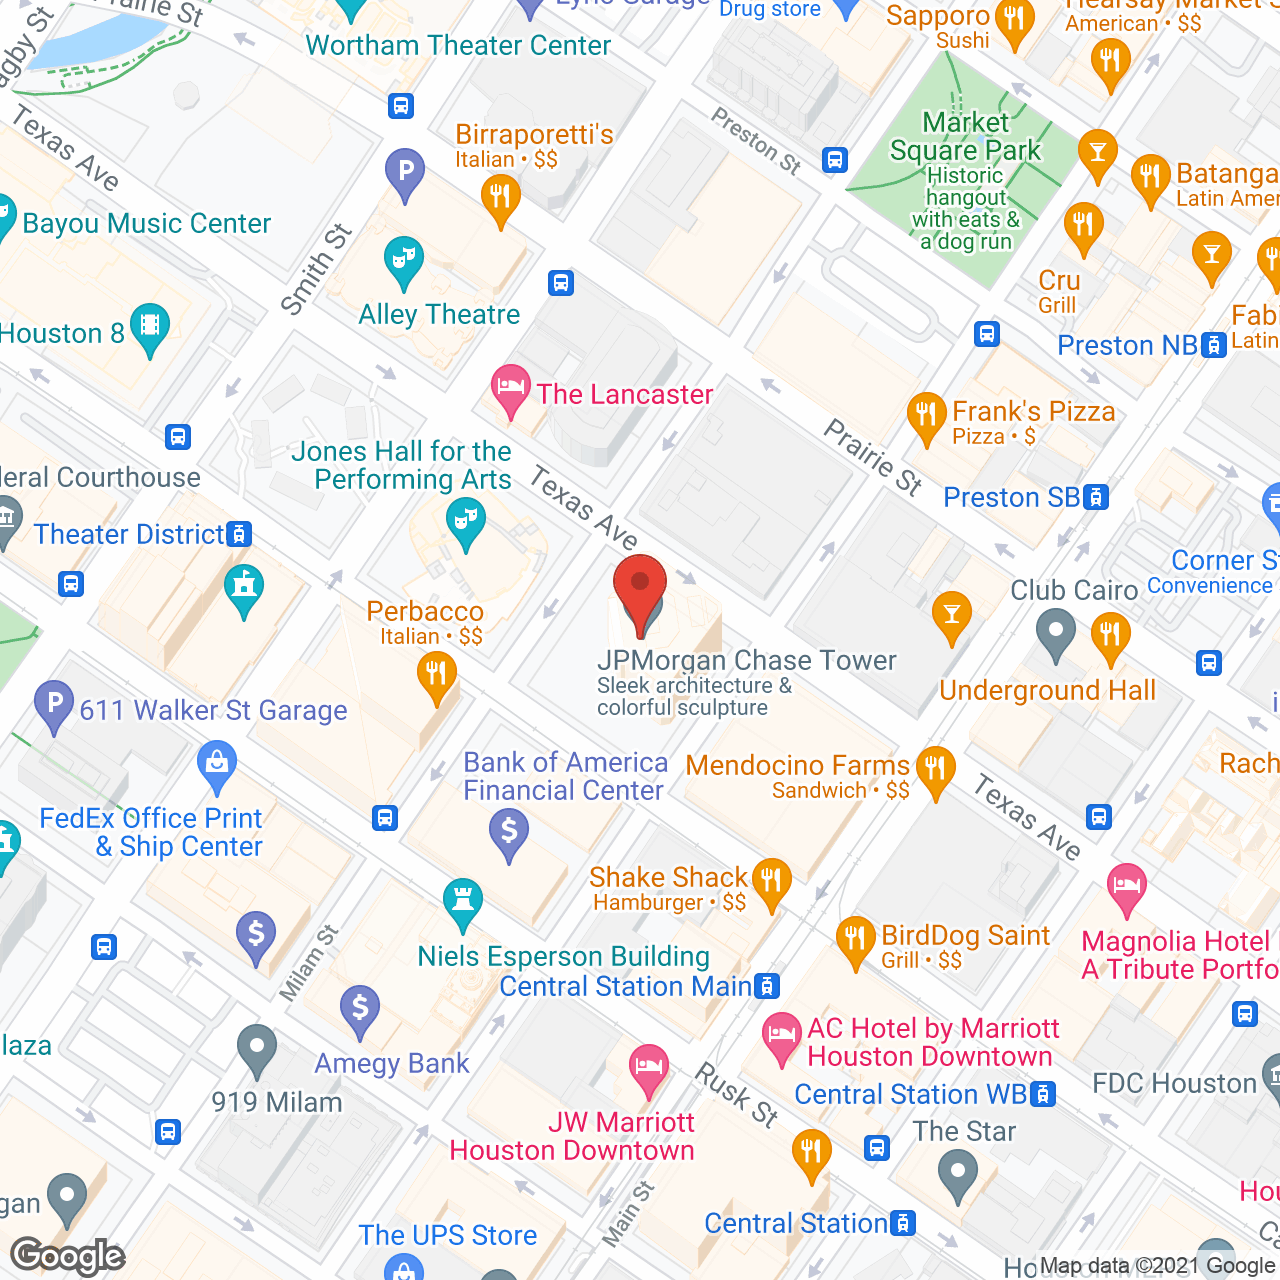 Cizik Interests in google map